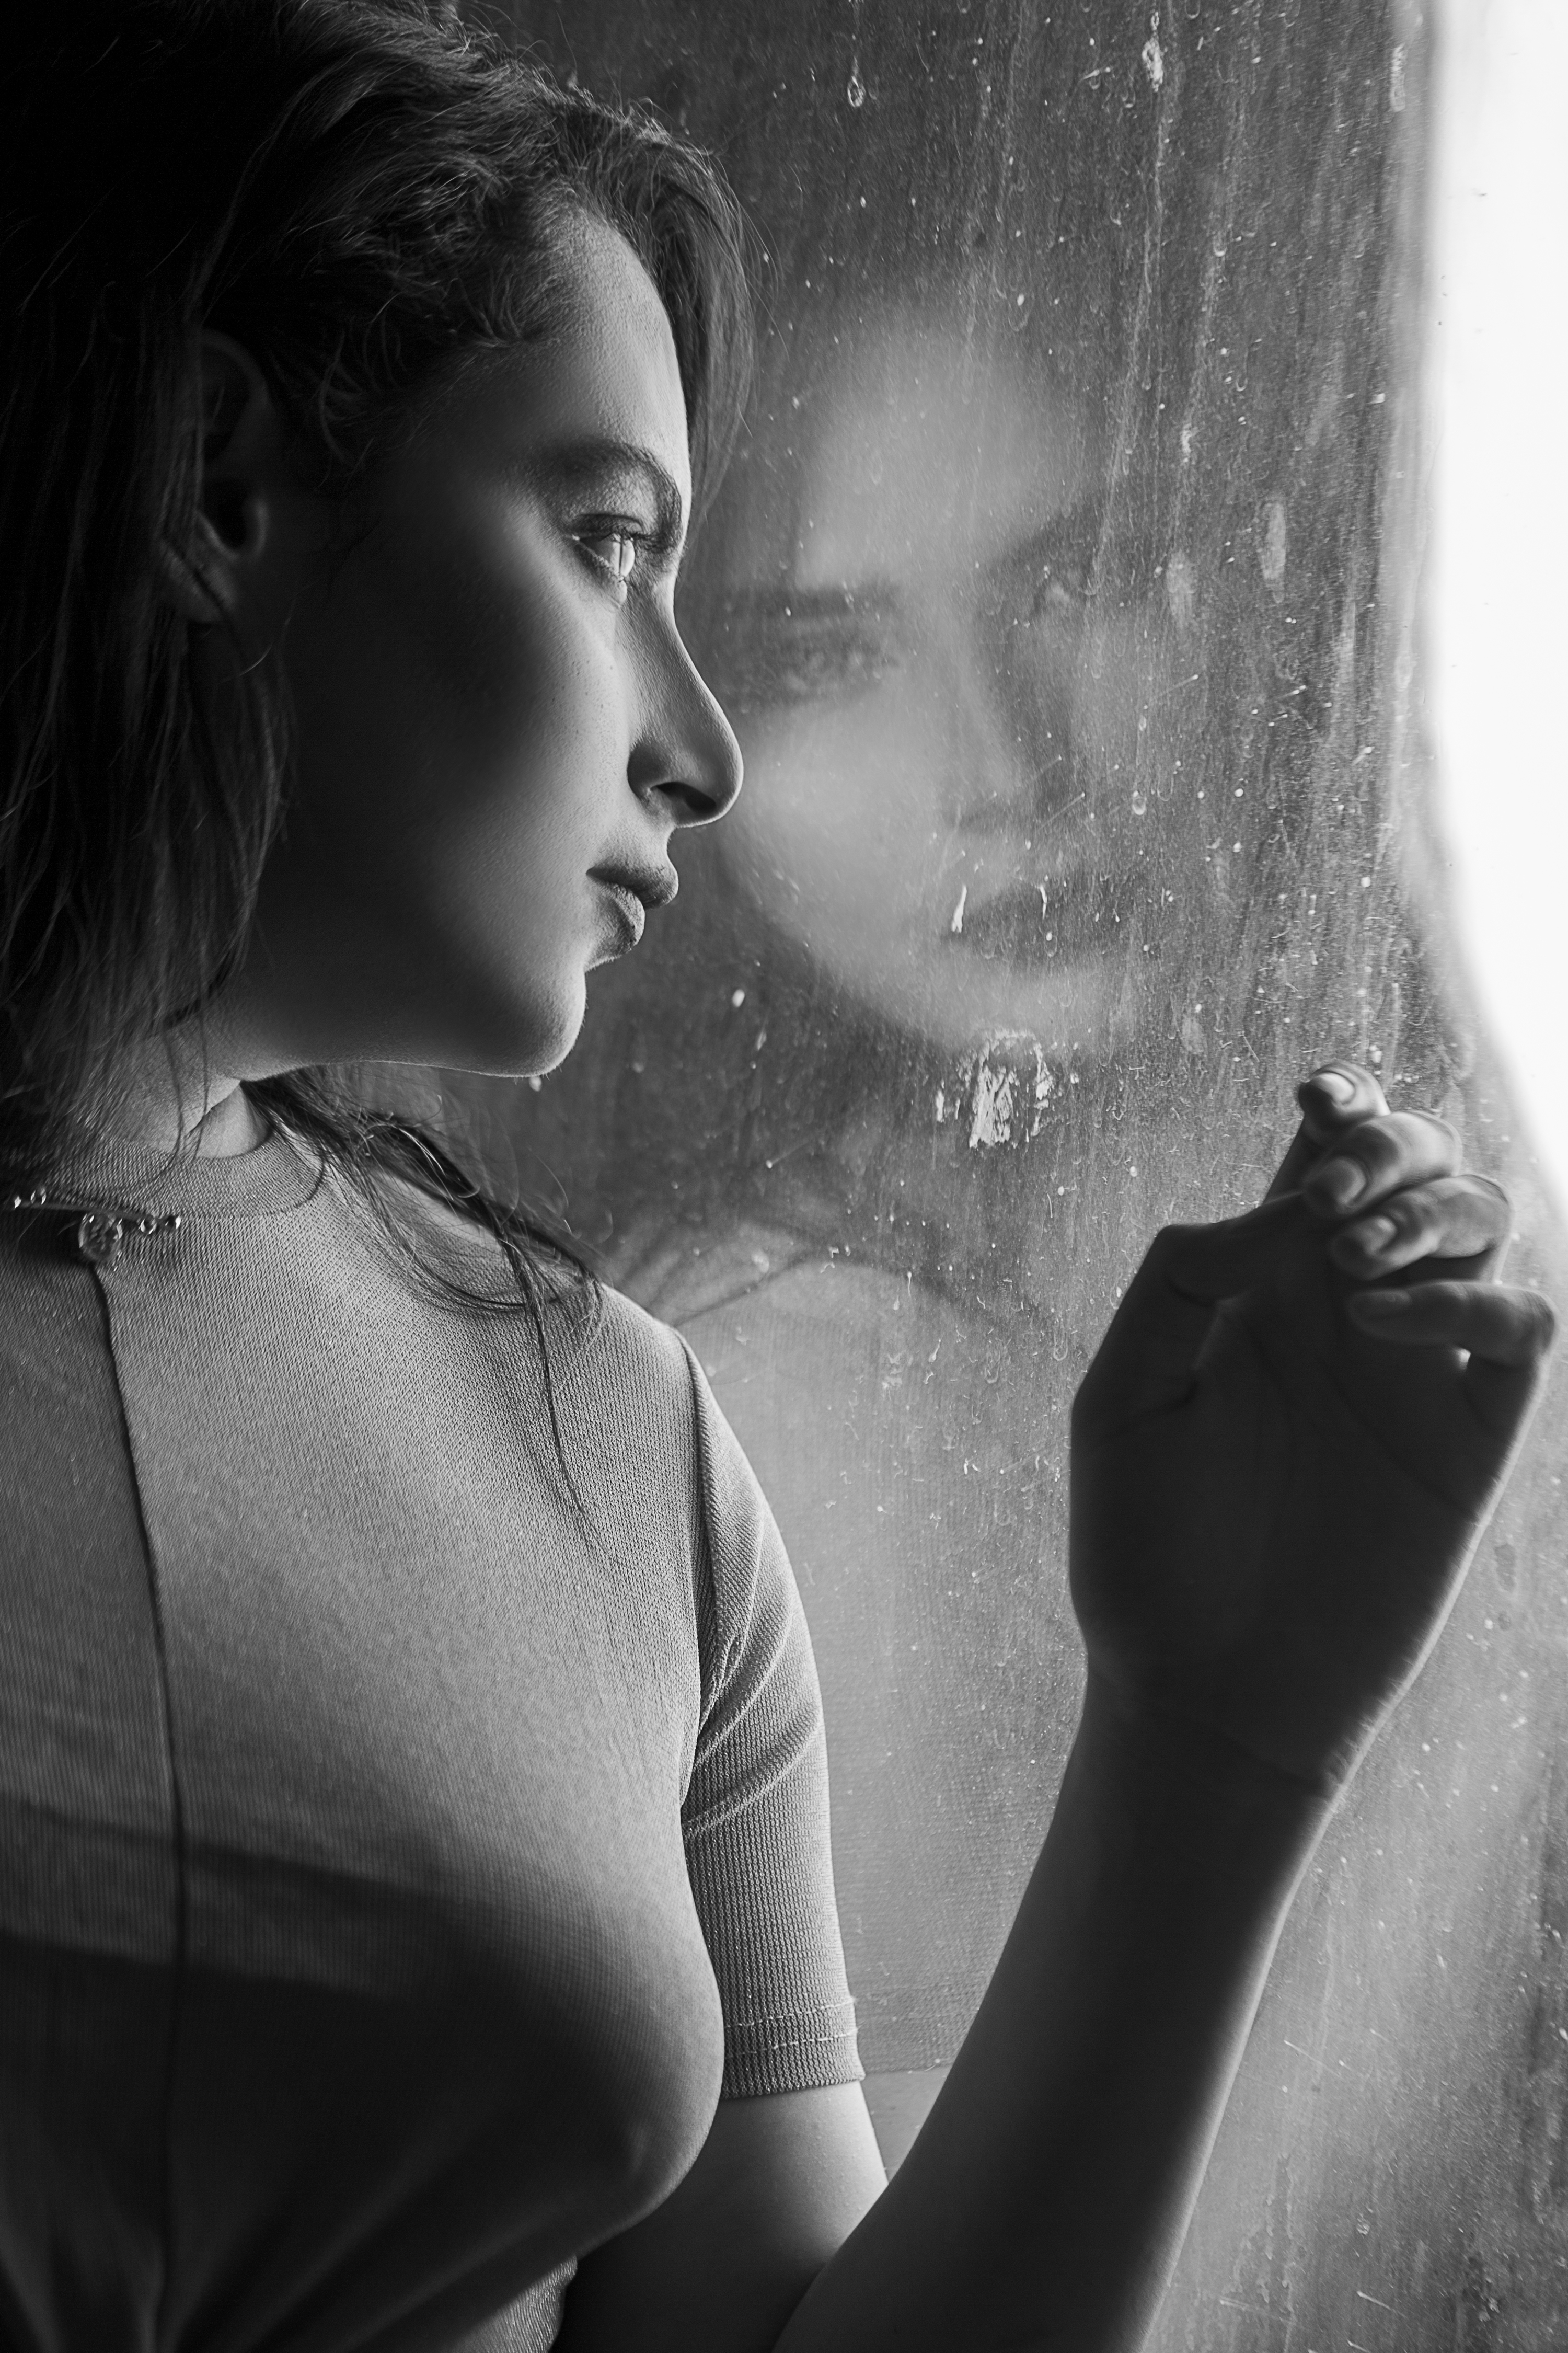 mujer-ventana-mirando-lluvia-foto-blanco-negro.jpg